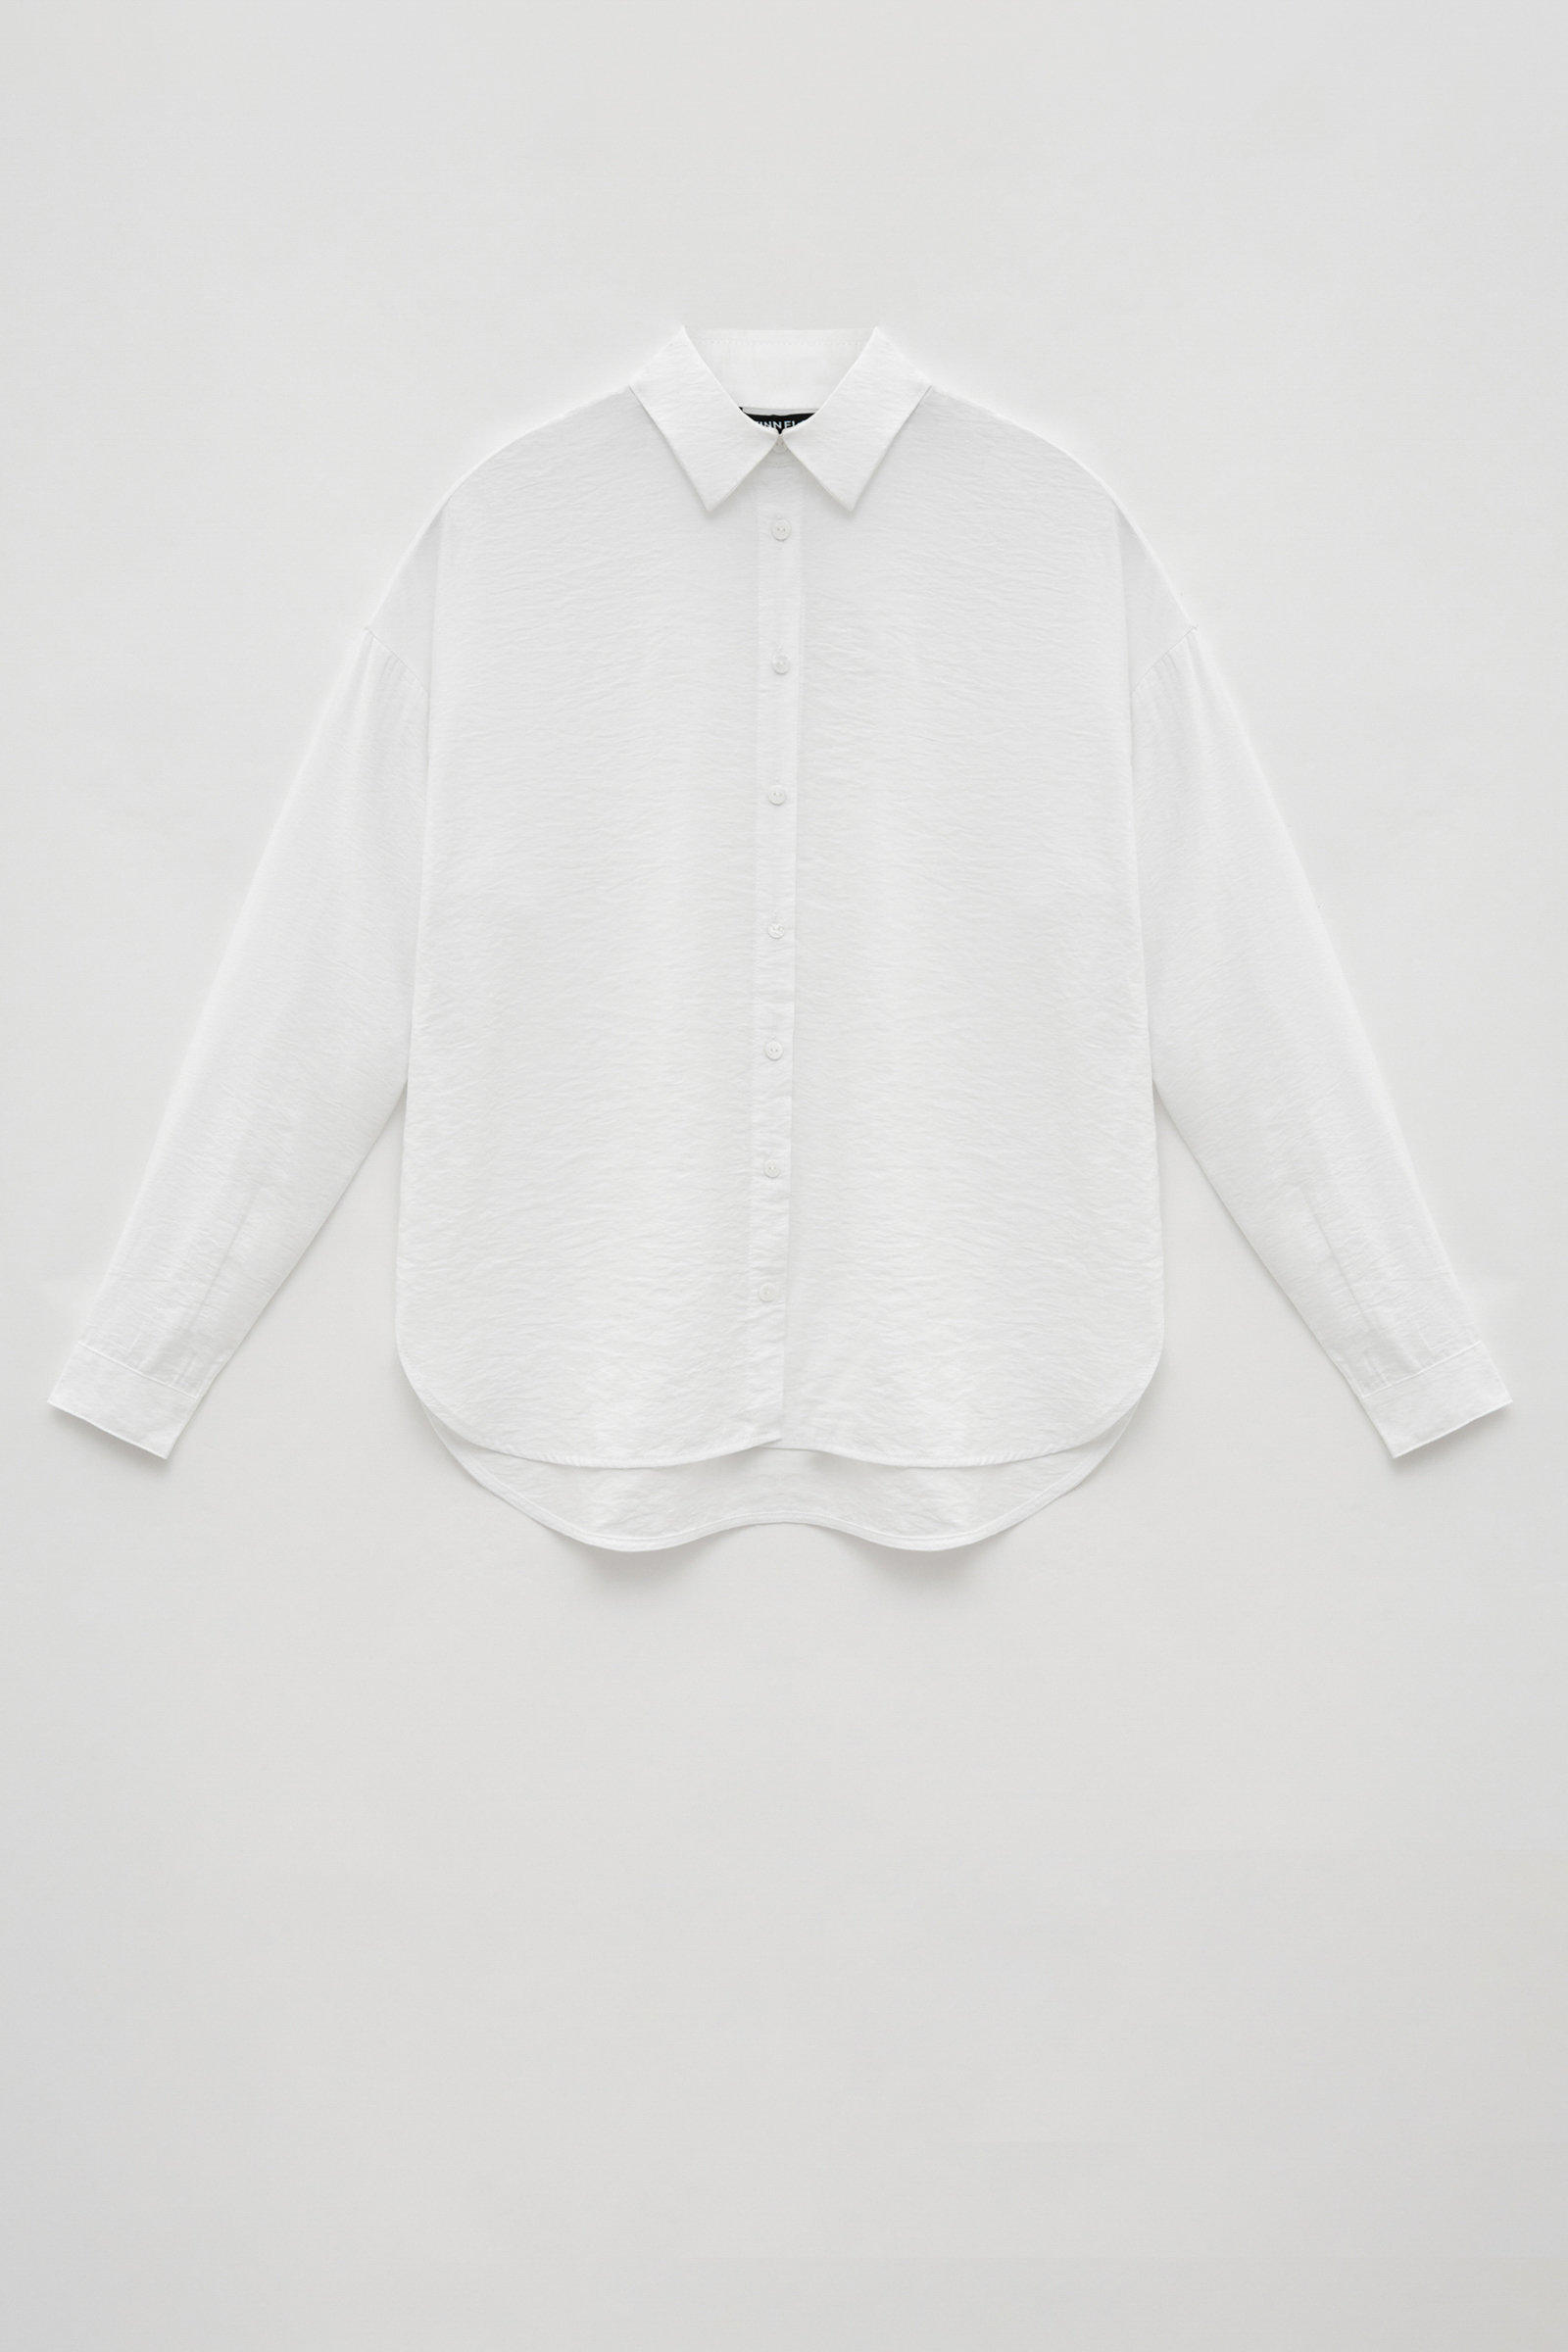 Рубашка женская Finn Flare FSC11044 белая S